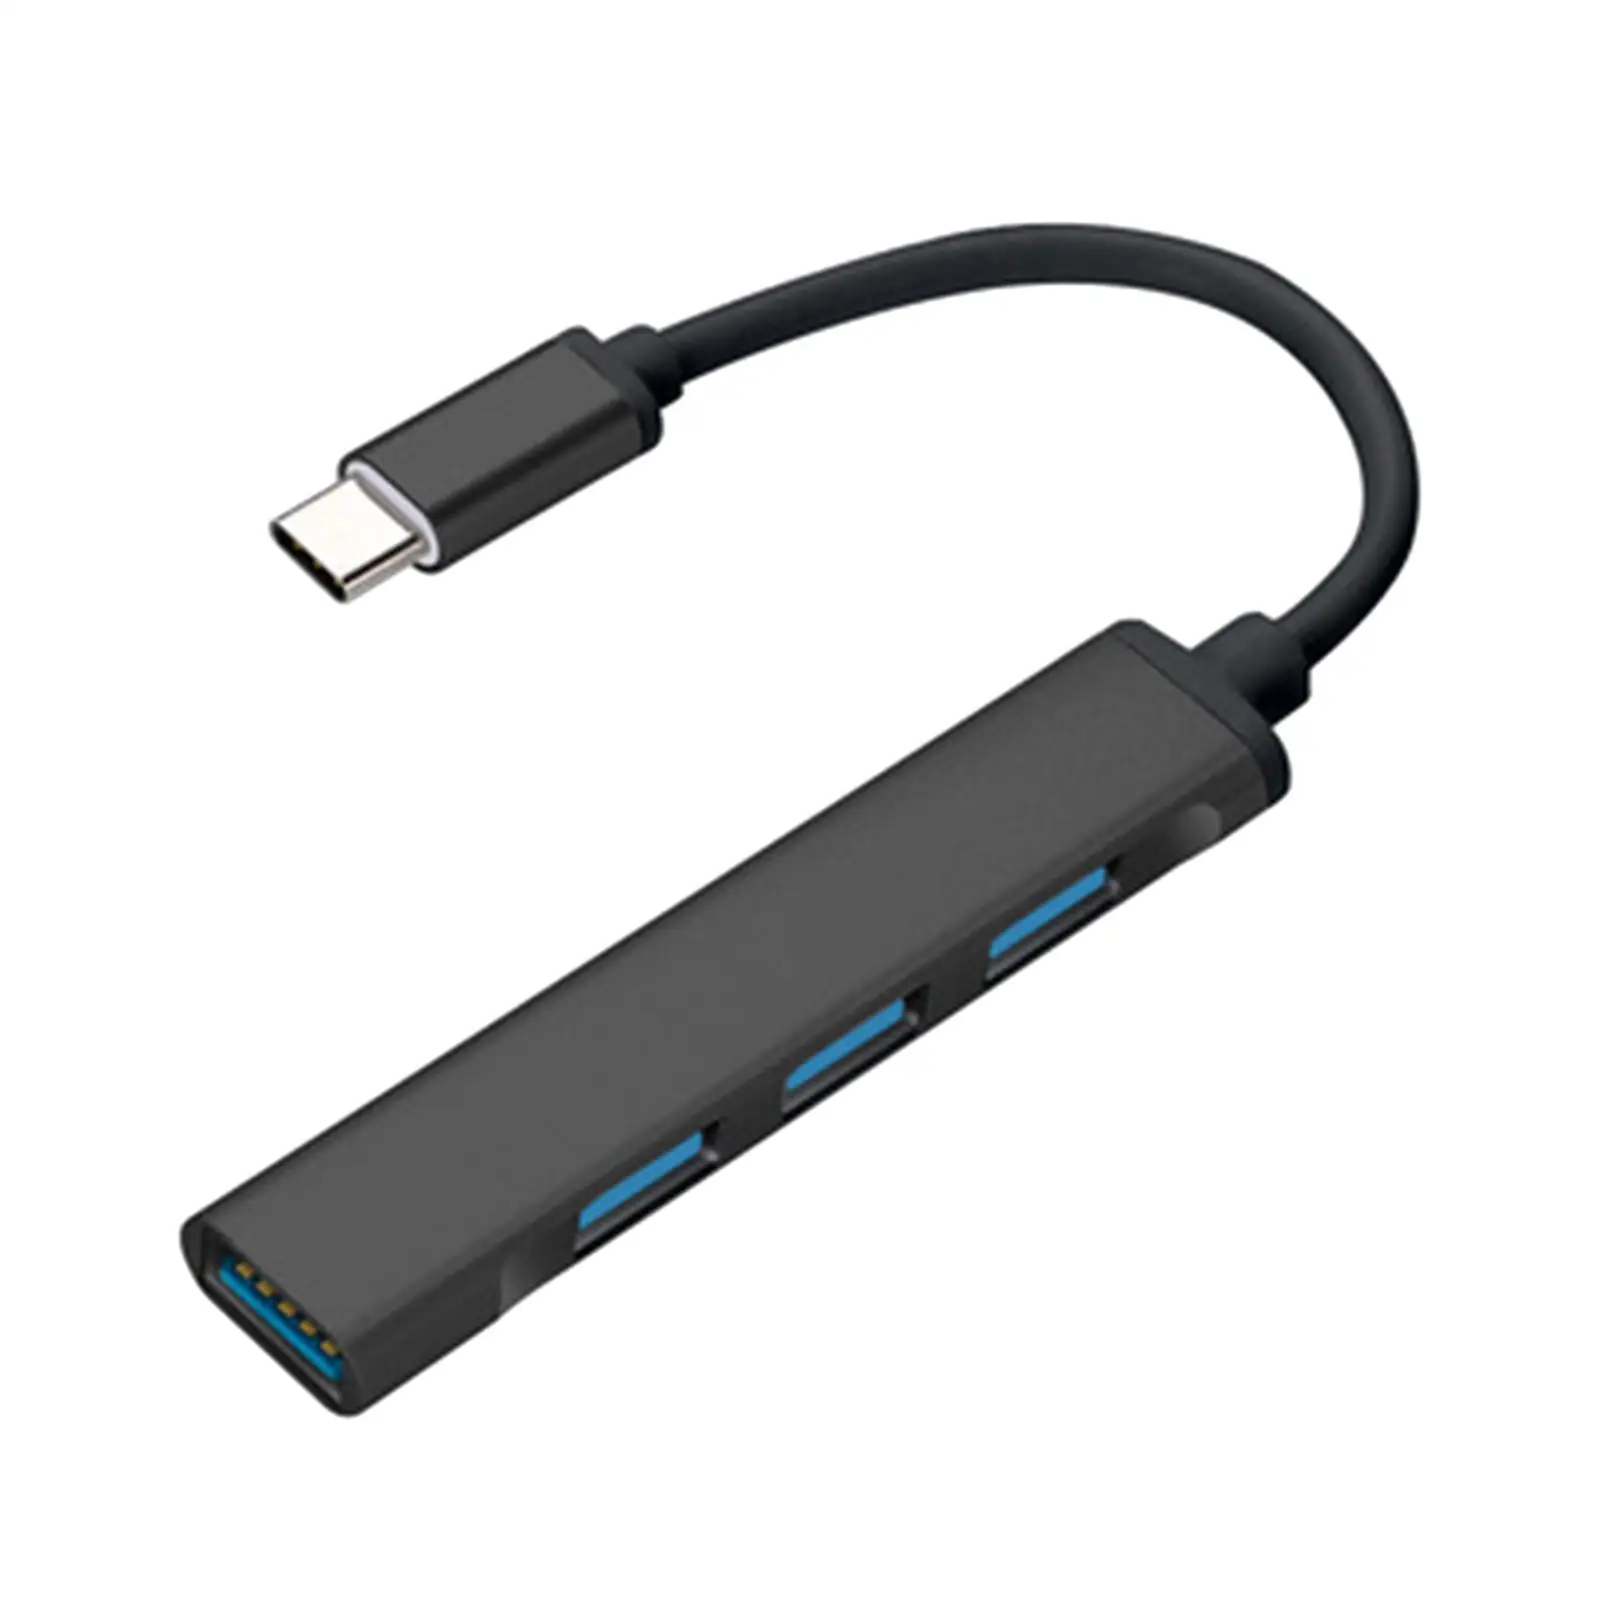 4in 1Multi Splitter USB3.0 Plug and Play Data Extender Hub for Huawei for TV Box